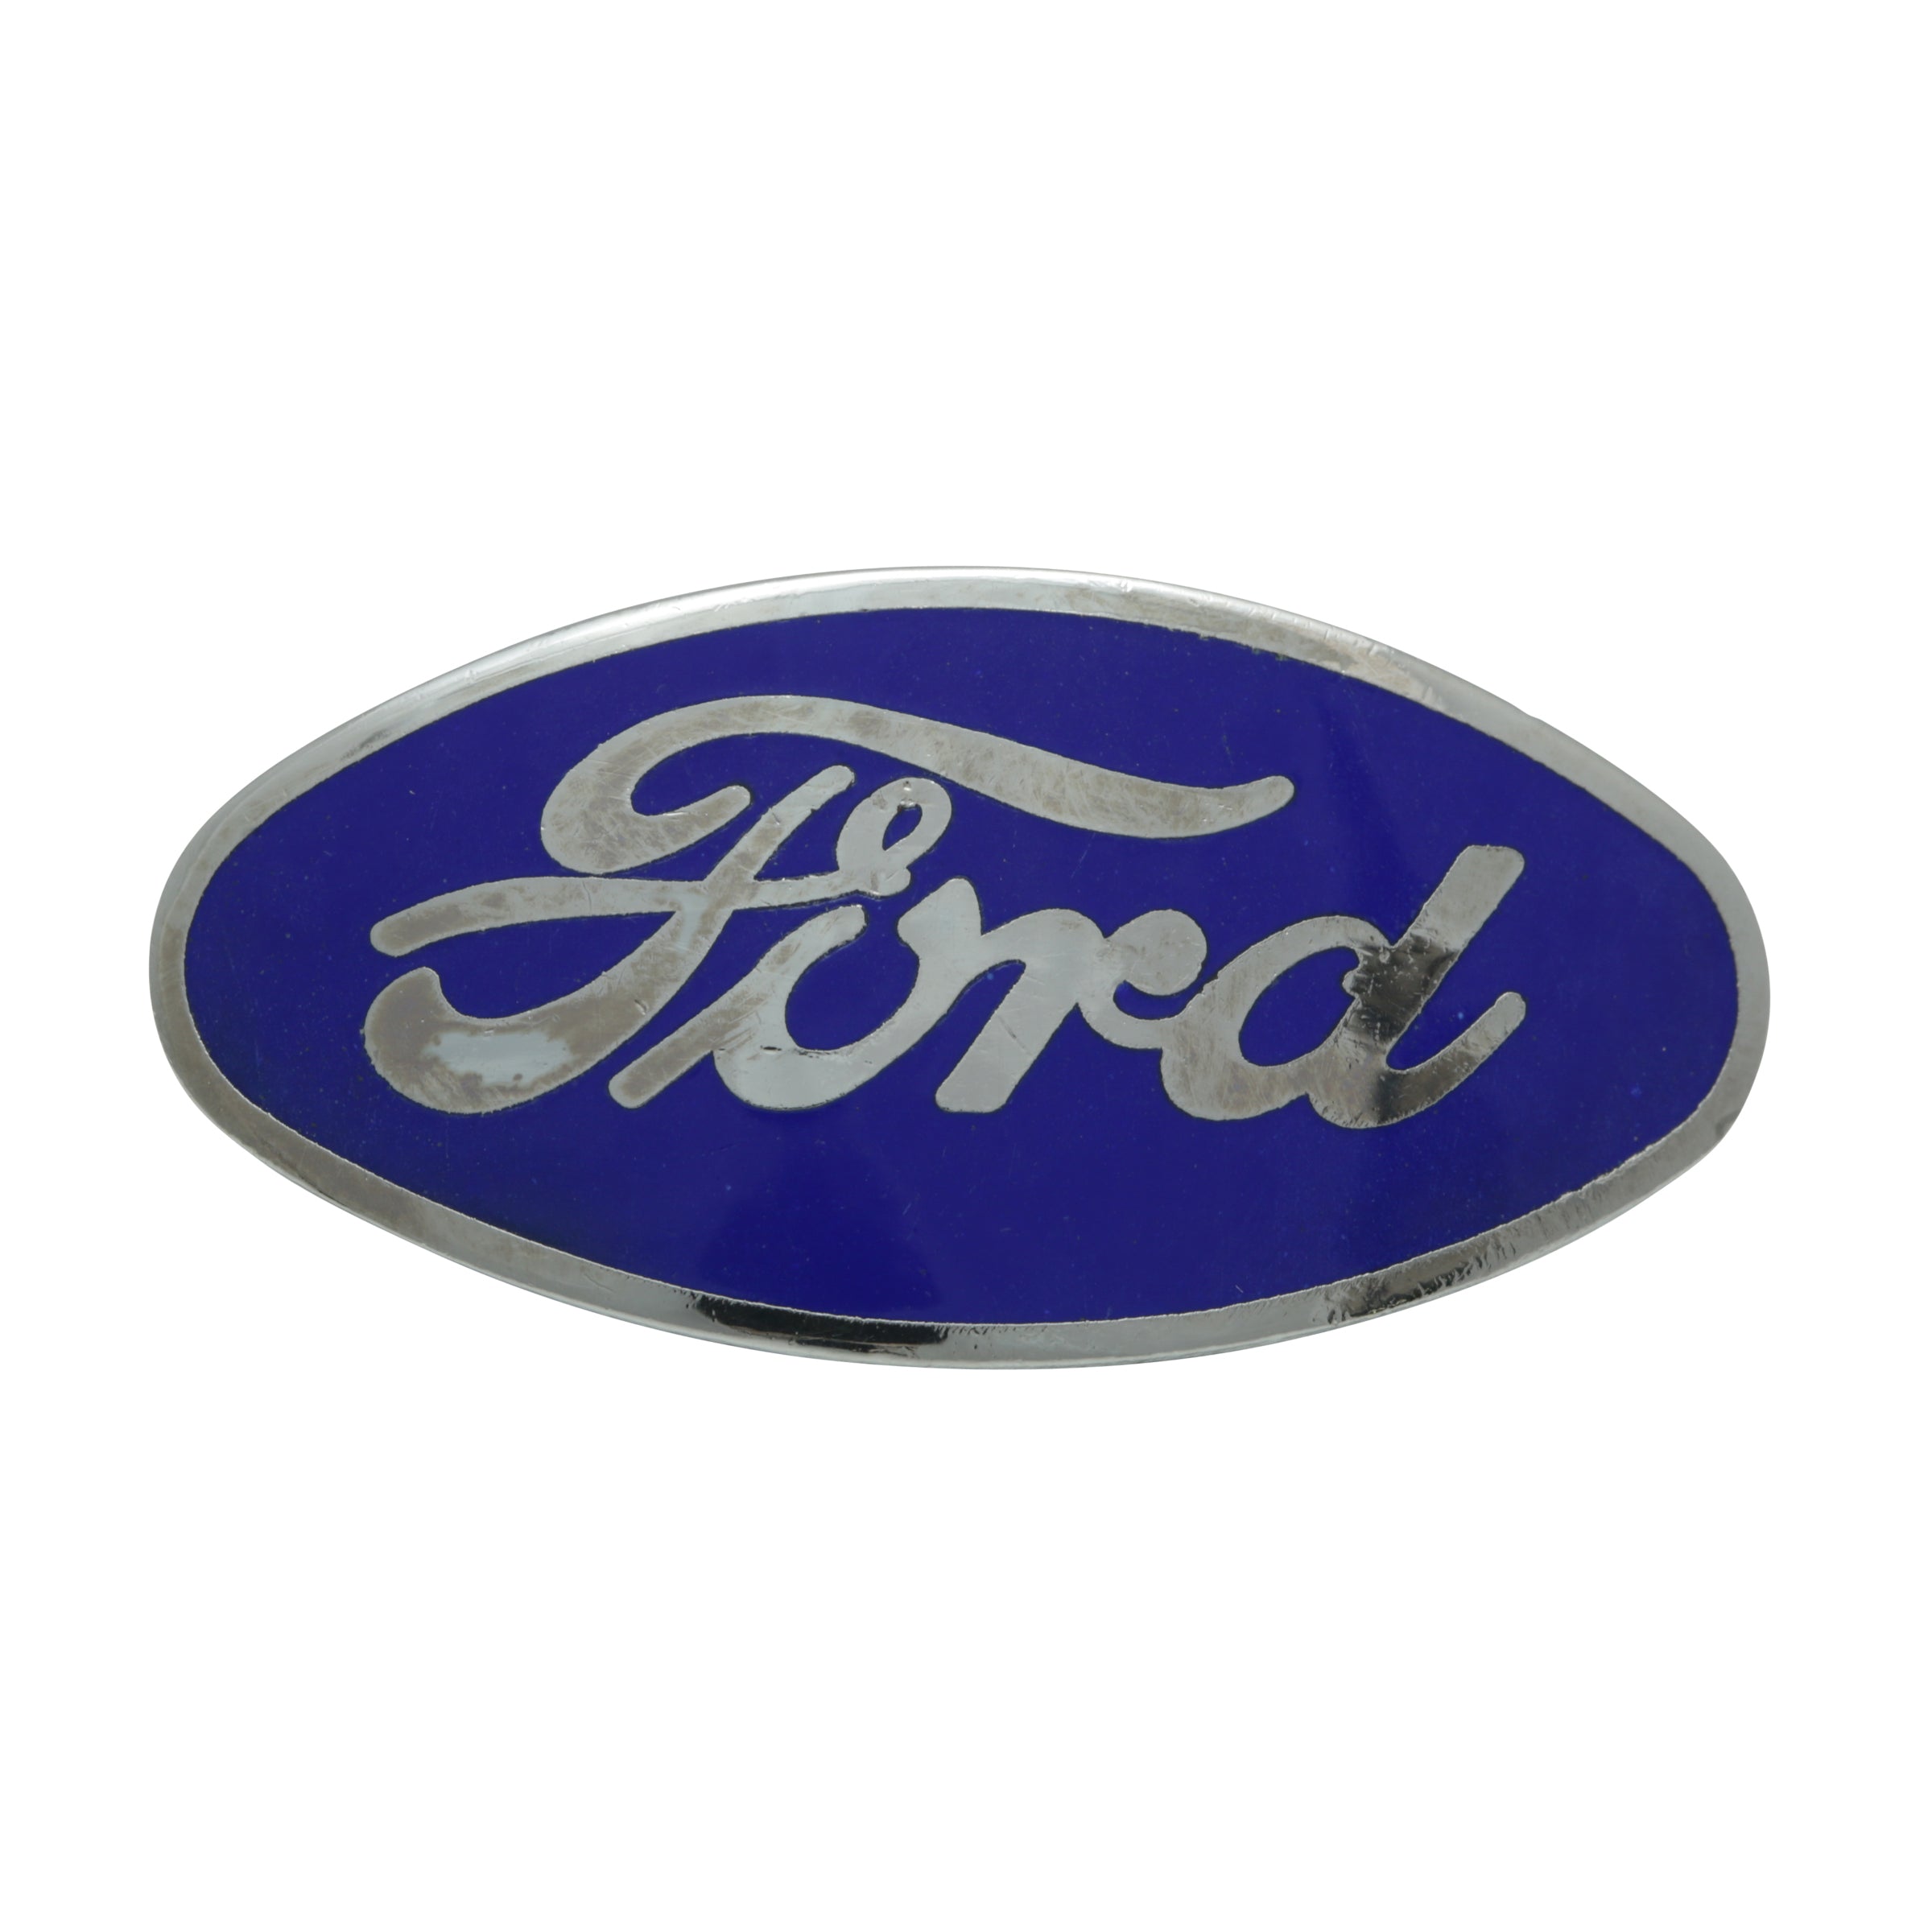 Radiator Emblem • 1933 Ford Passenger